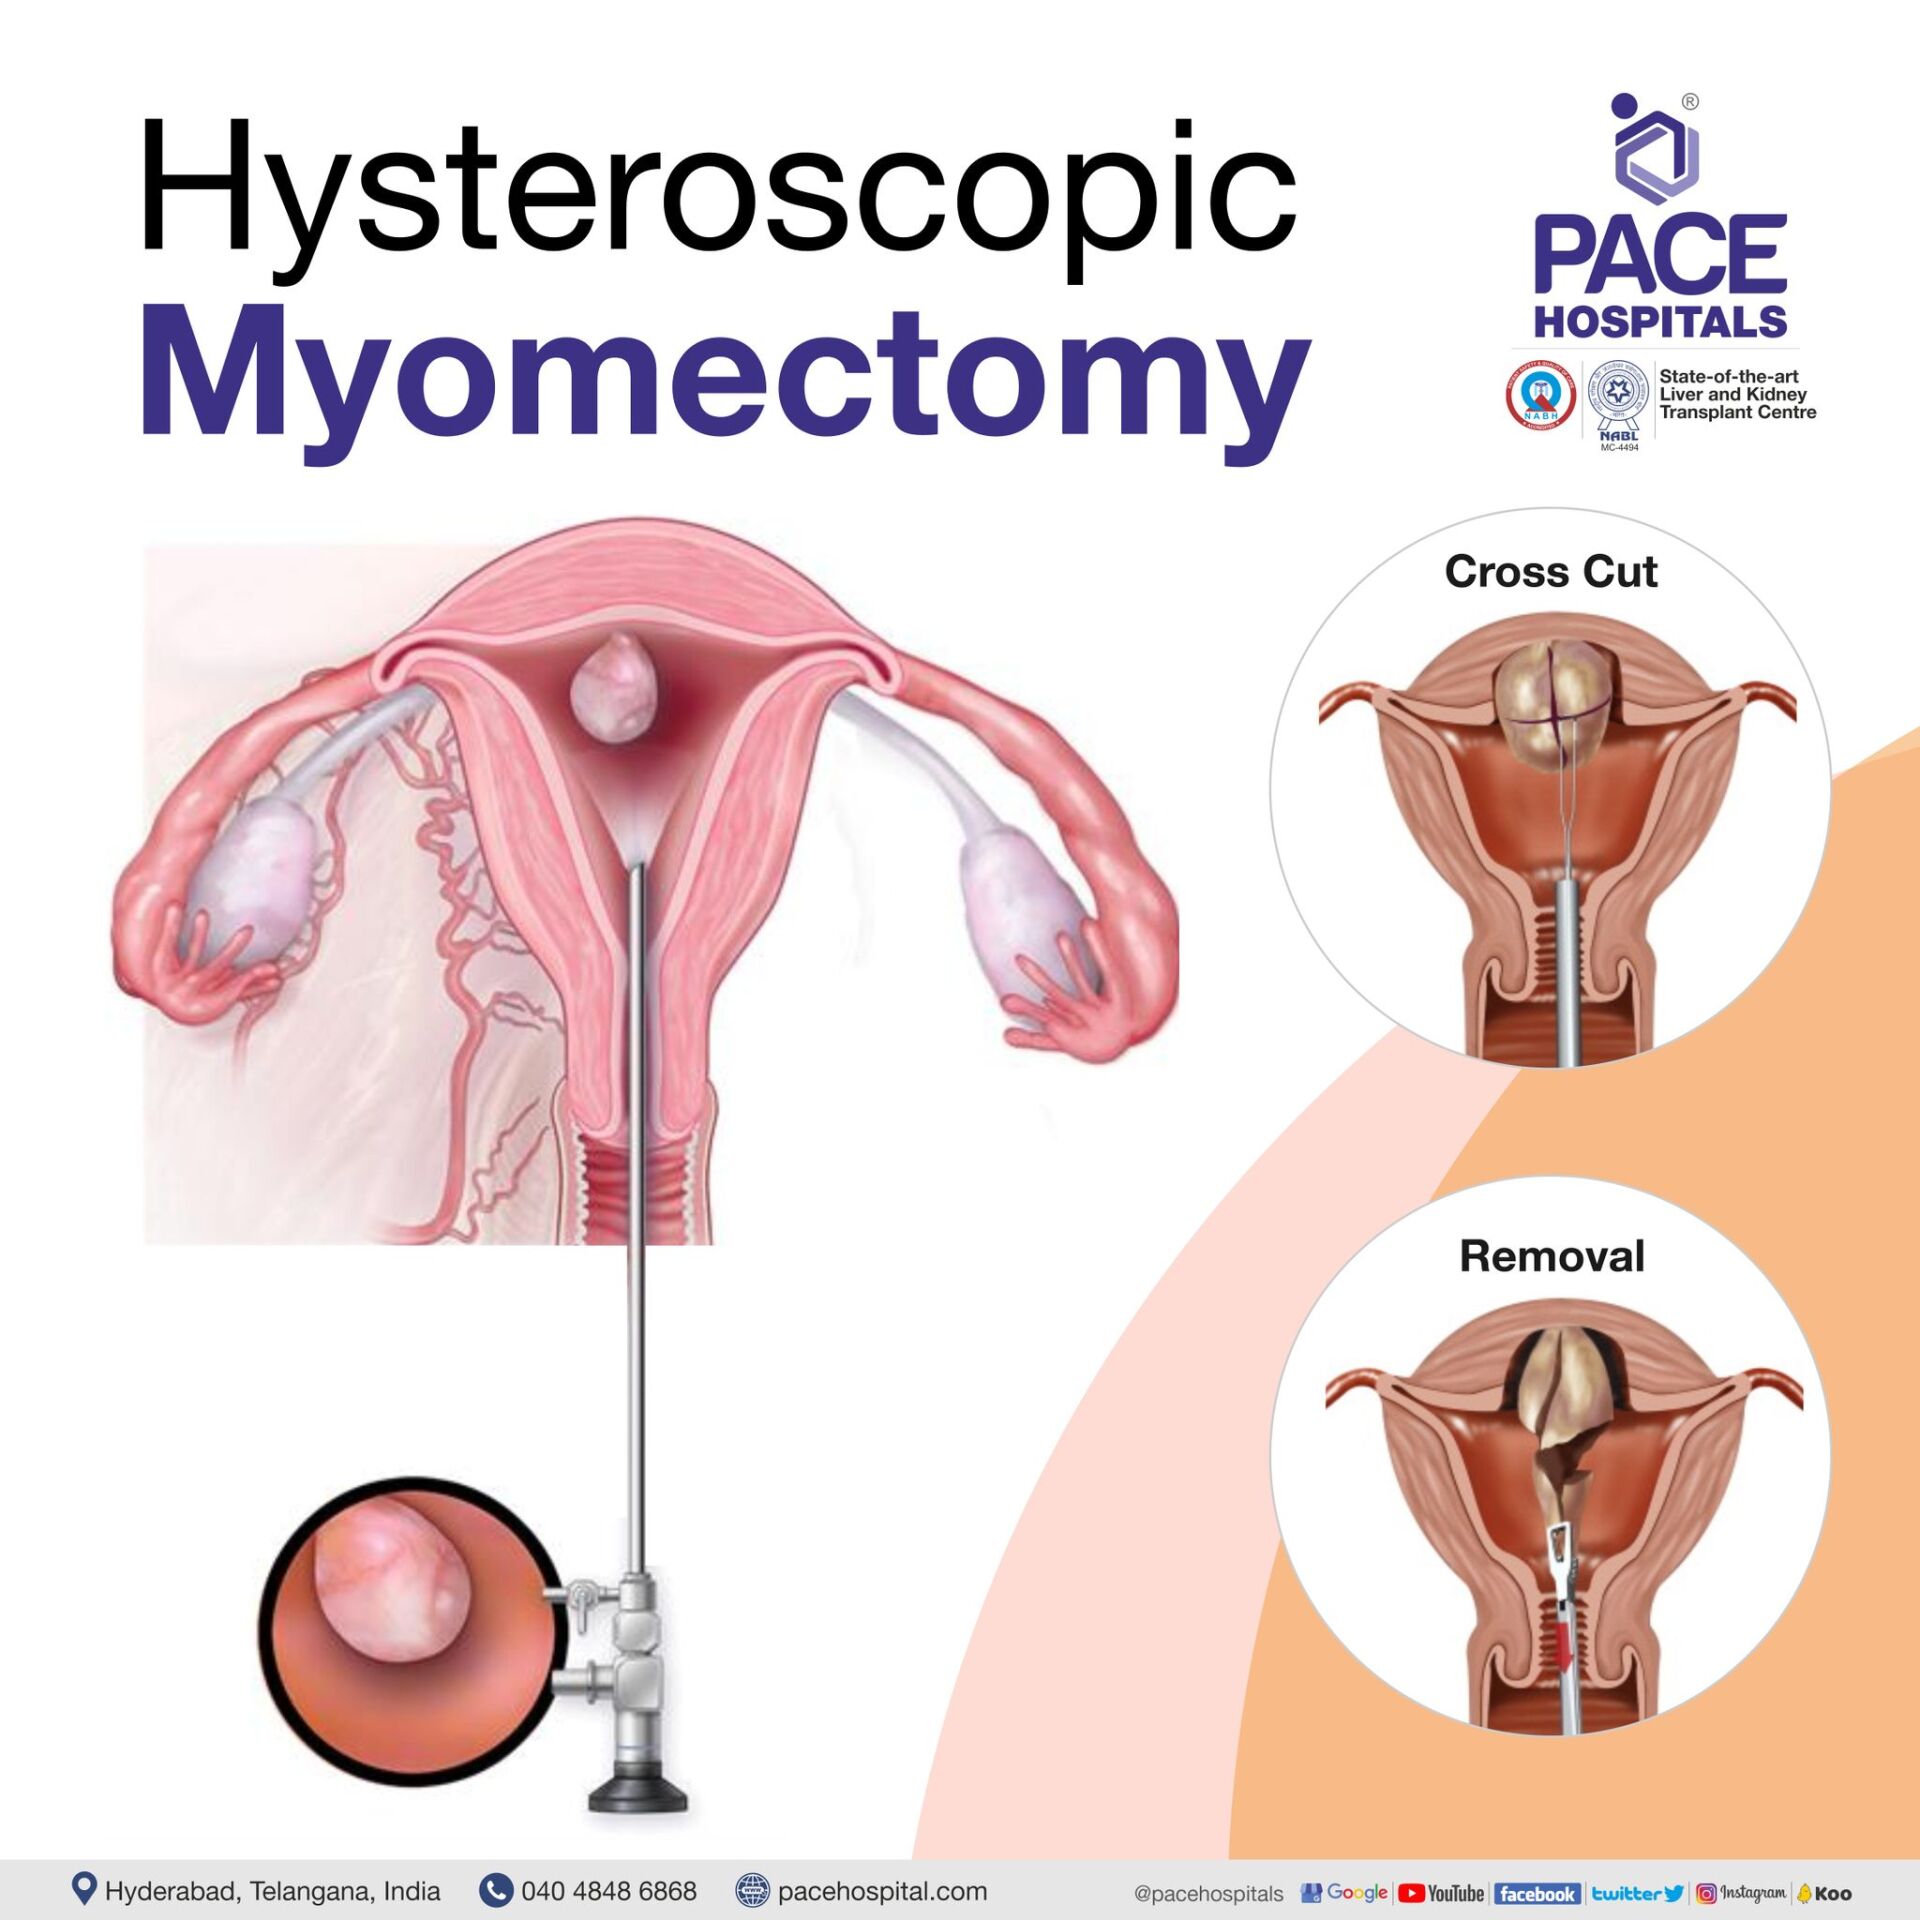 Hysteroscopic Myomectomy in Hyderabad | Hysteroscopic Myomectomy in India | Hysteroscopic Myomectomy Procedure